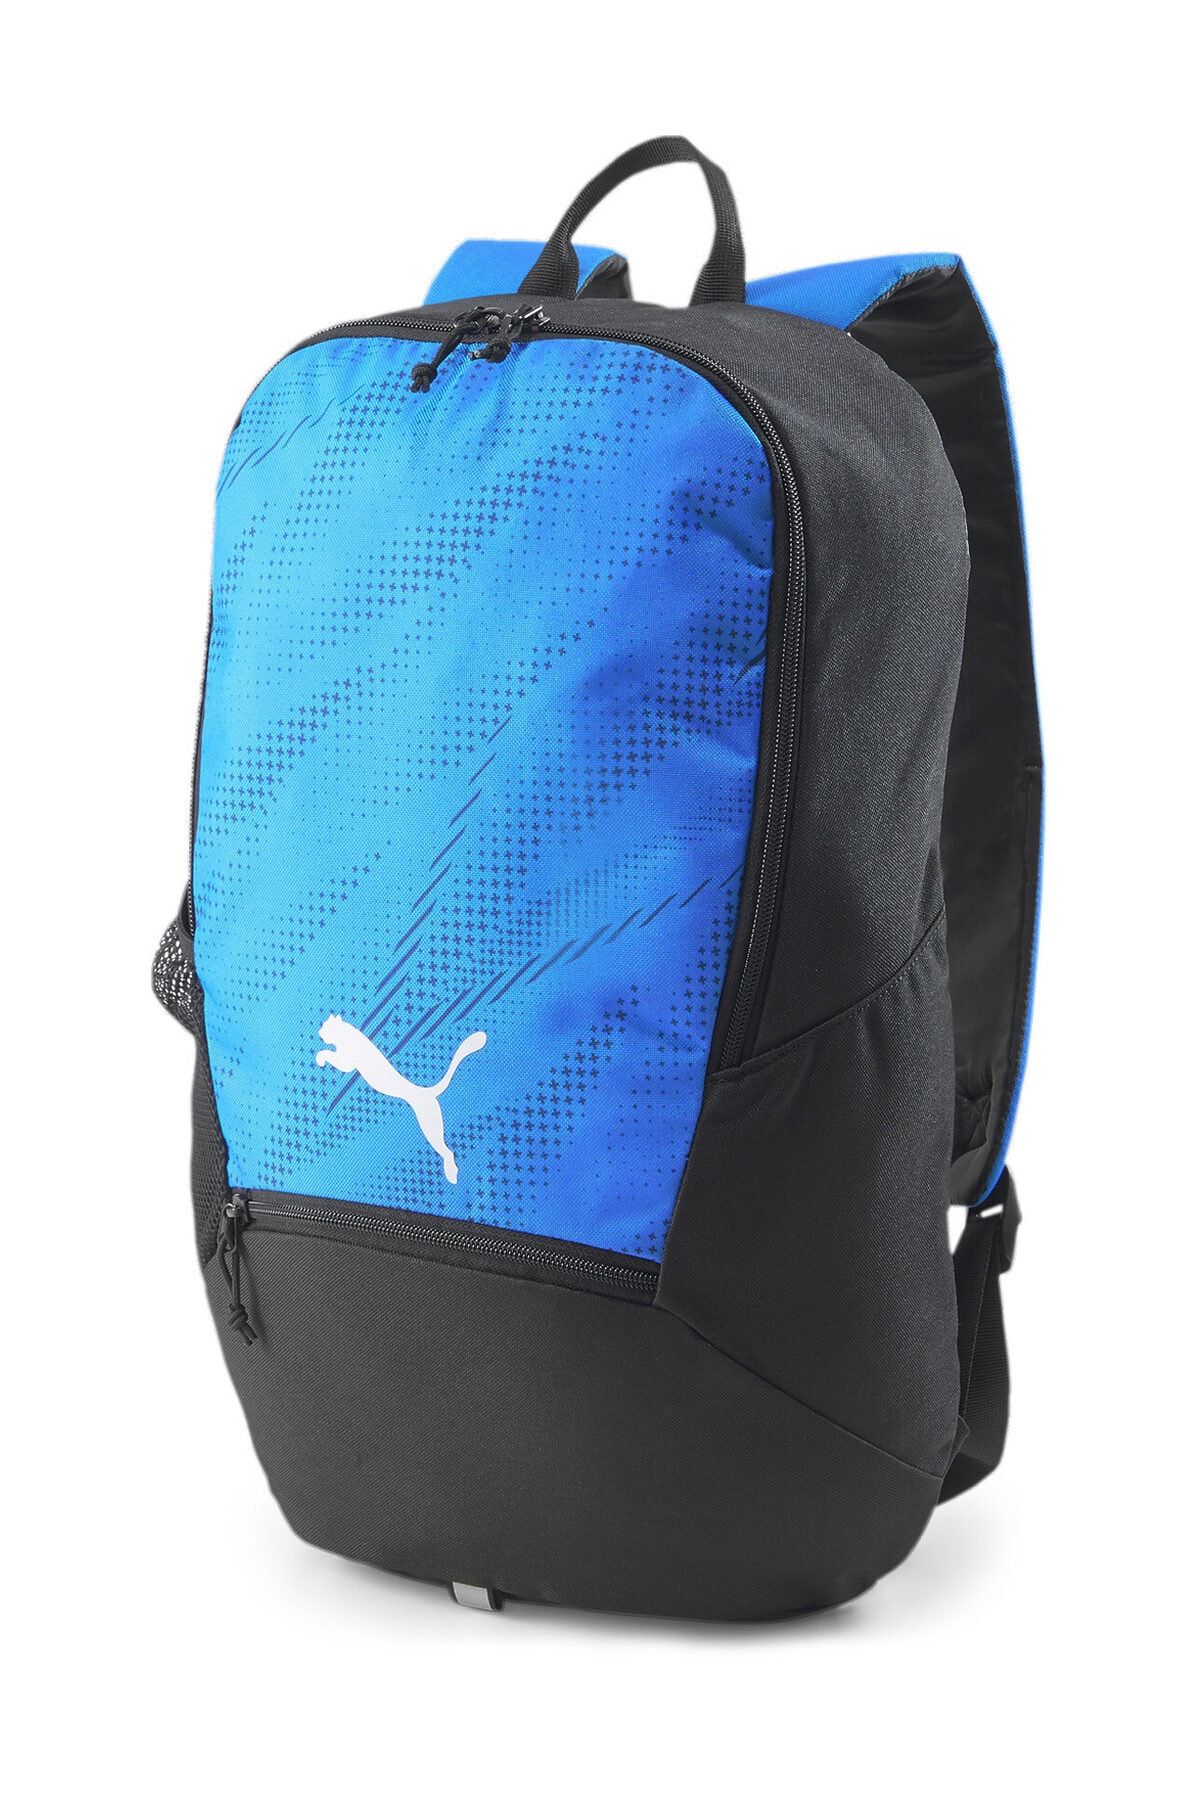 Puma IndividualRISE Backpack - Mavi Sırt Çantası